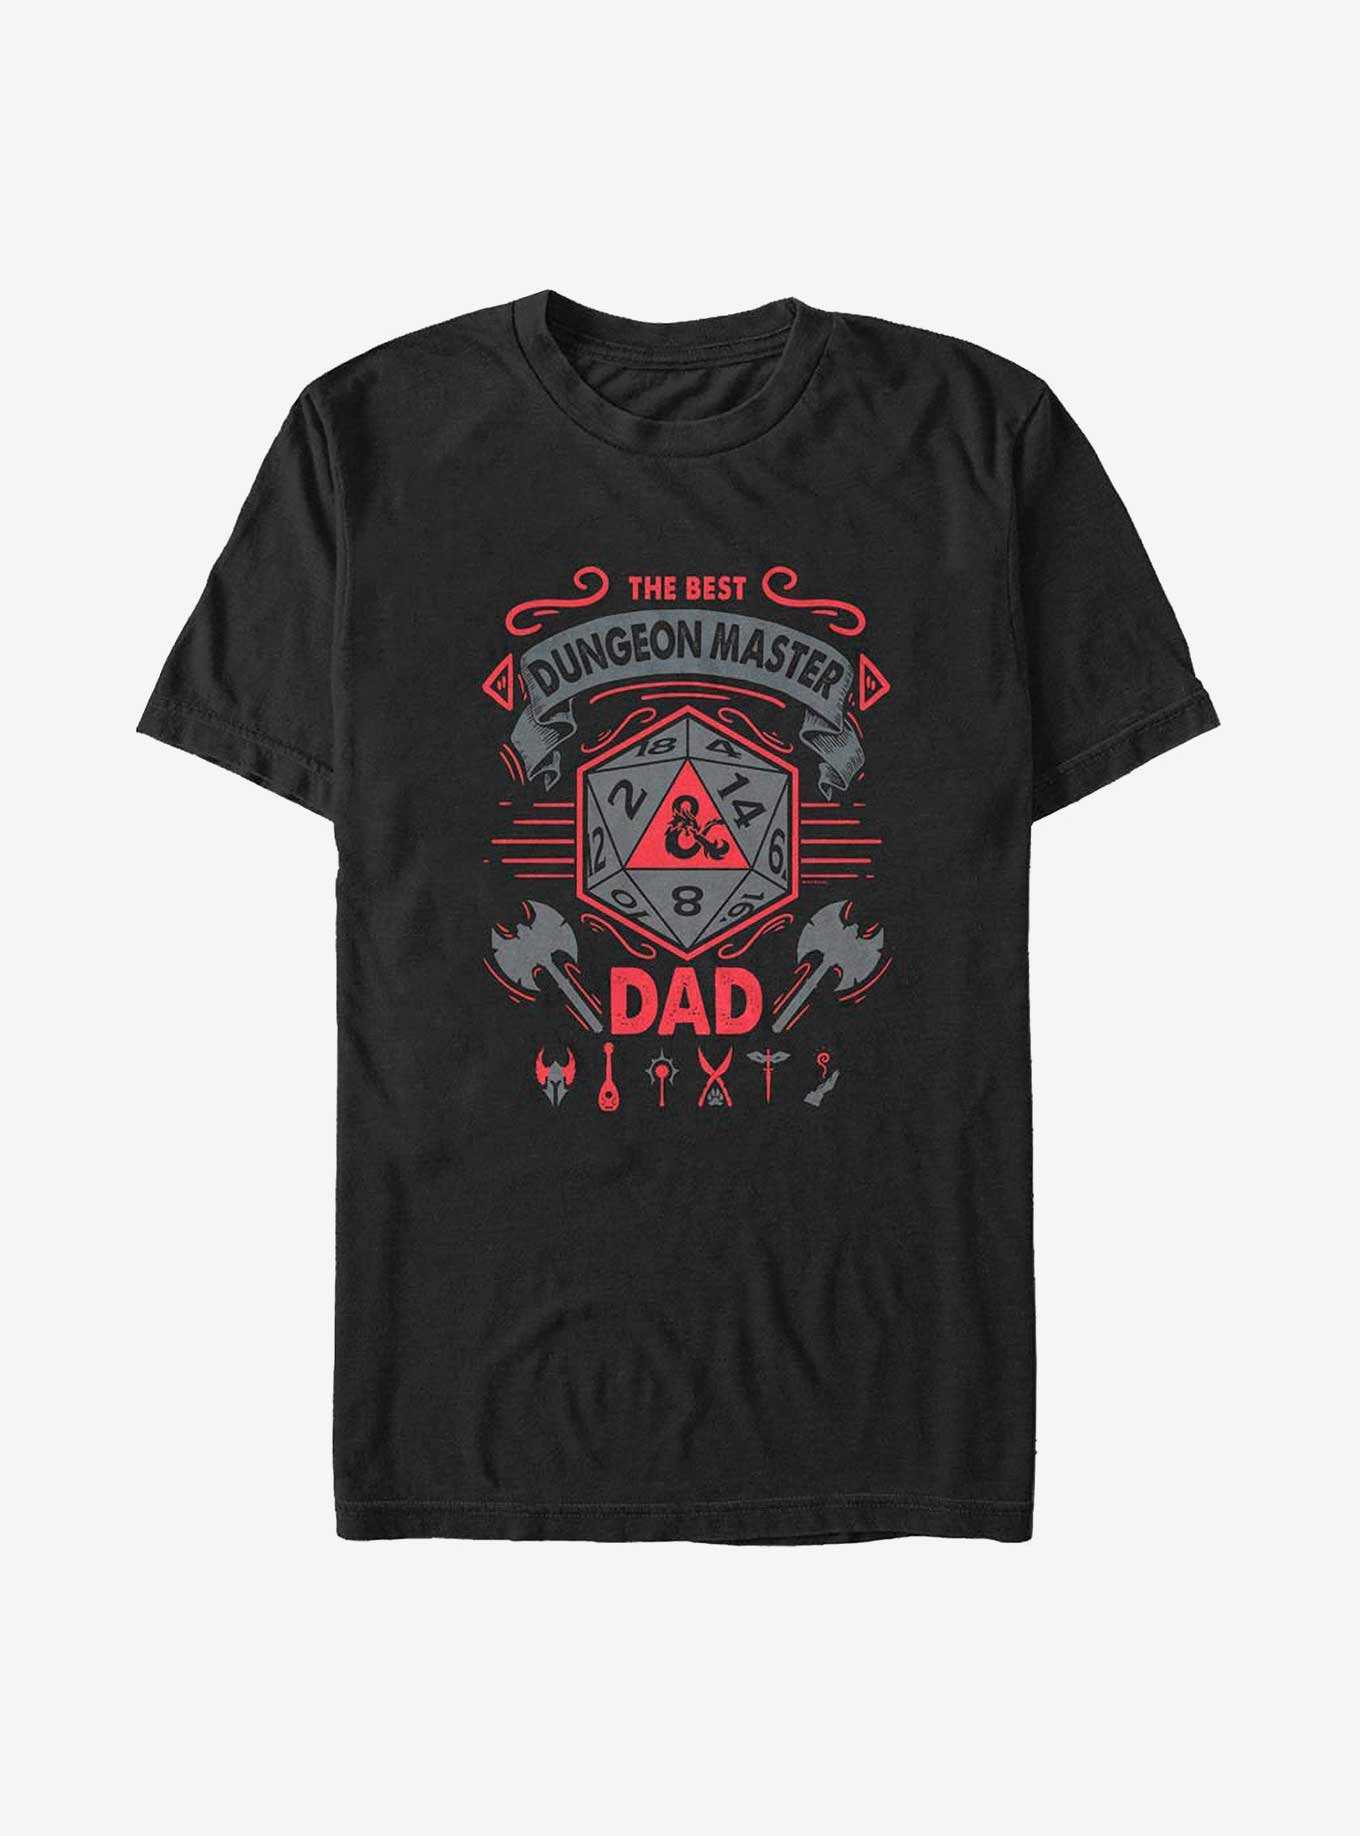 Dungeons & Dragons Dungeon Dad Big & Tall T-Shirt, , hi-res